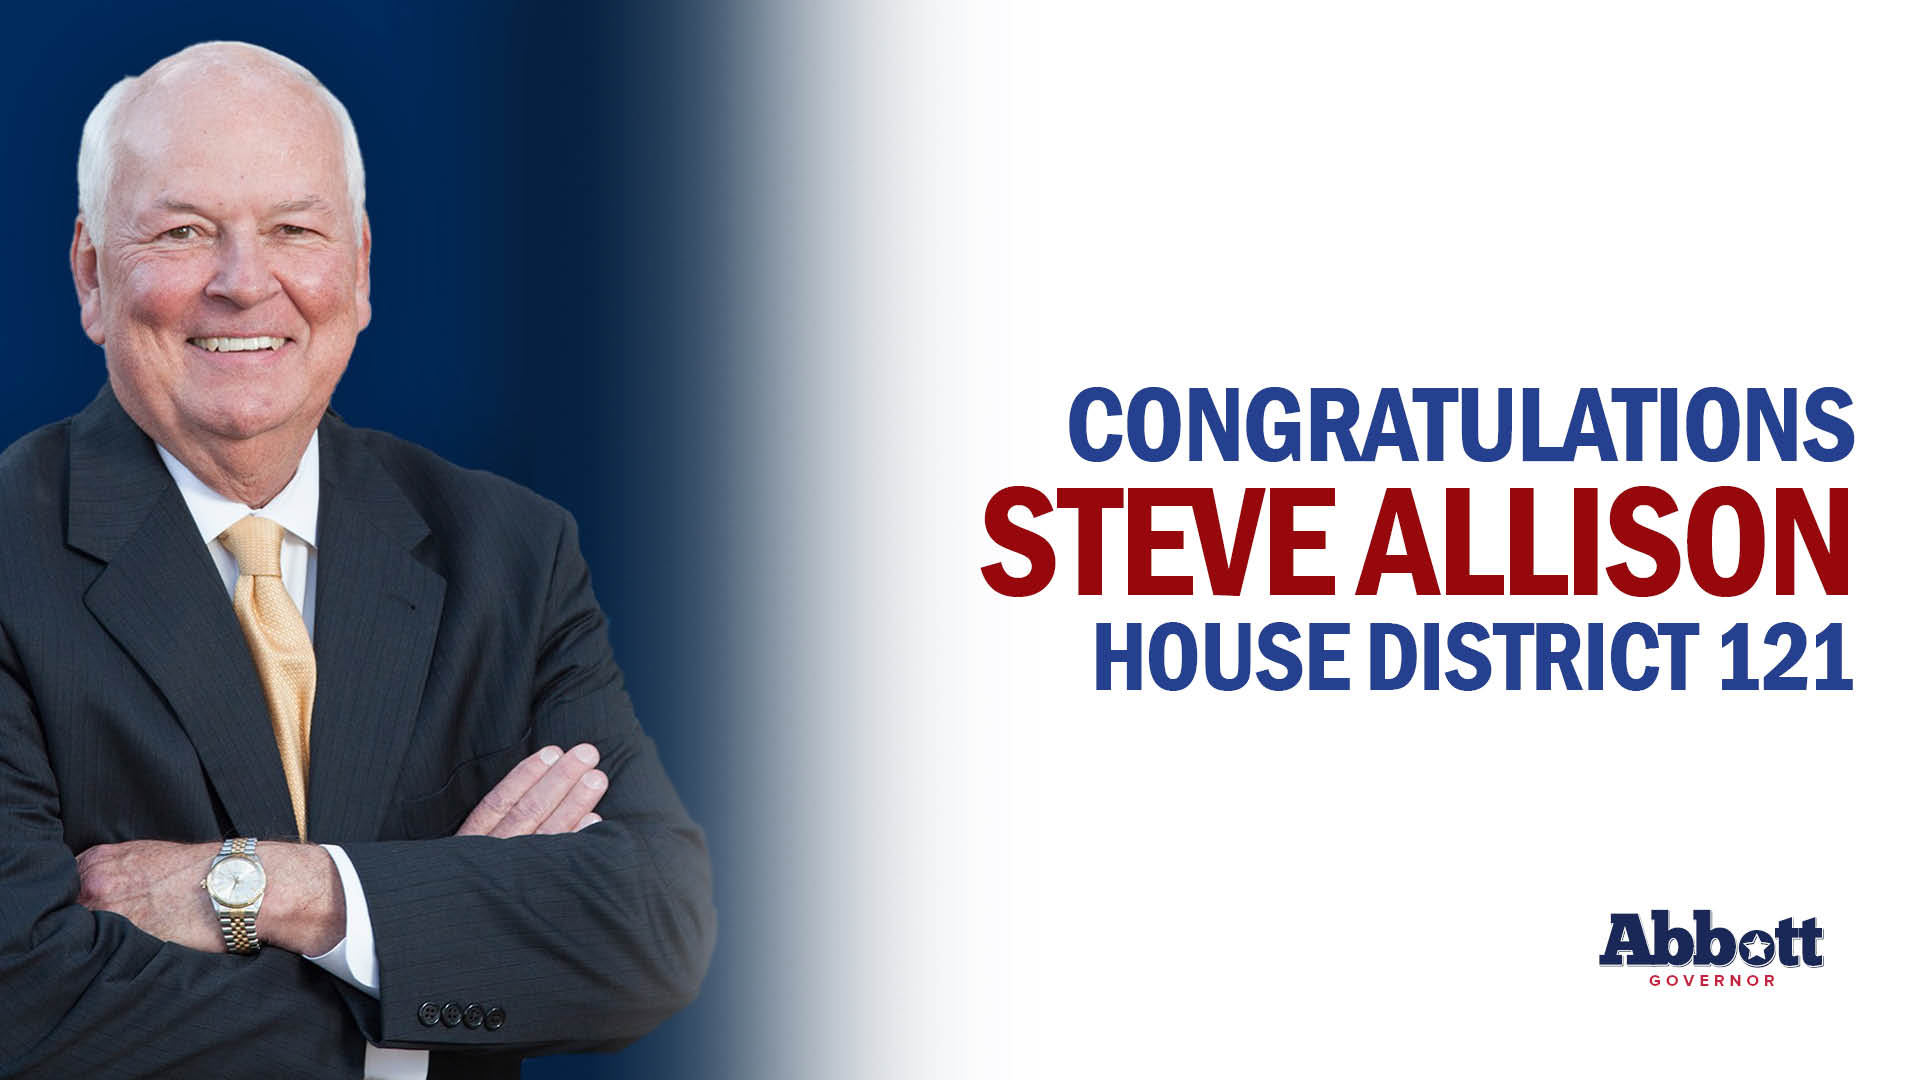 Governor Abbott Statement On Steve Allison Win In House District 121